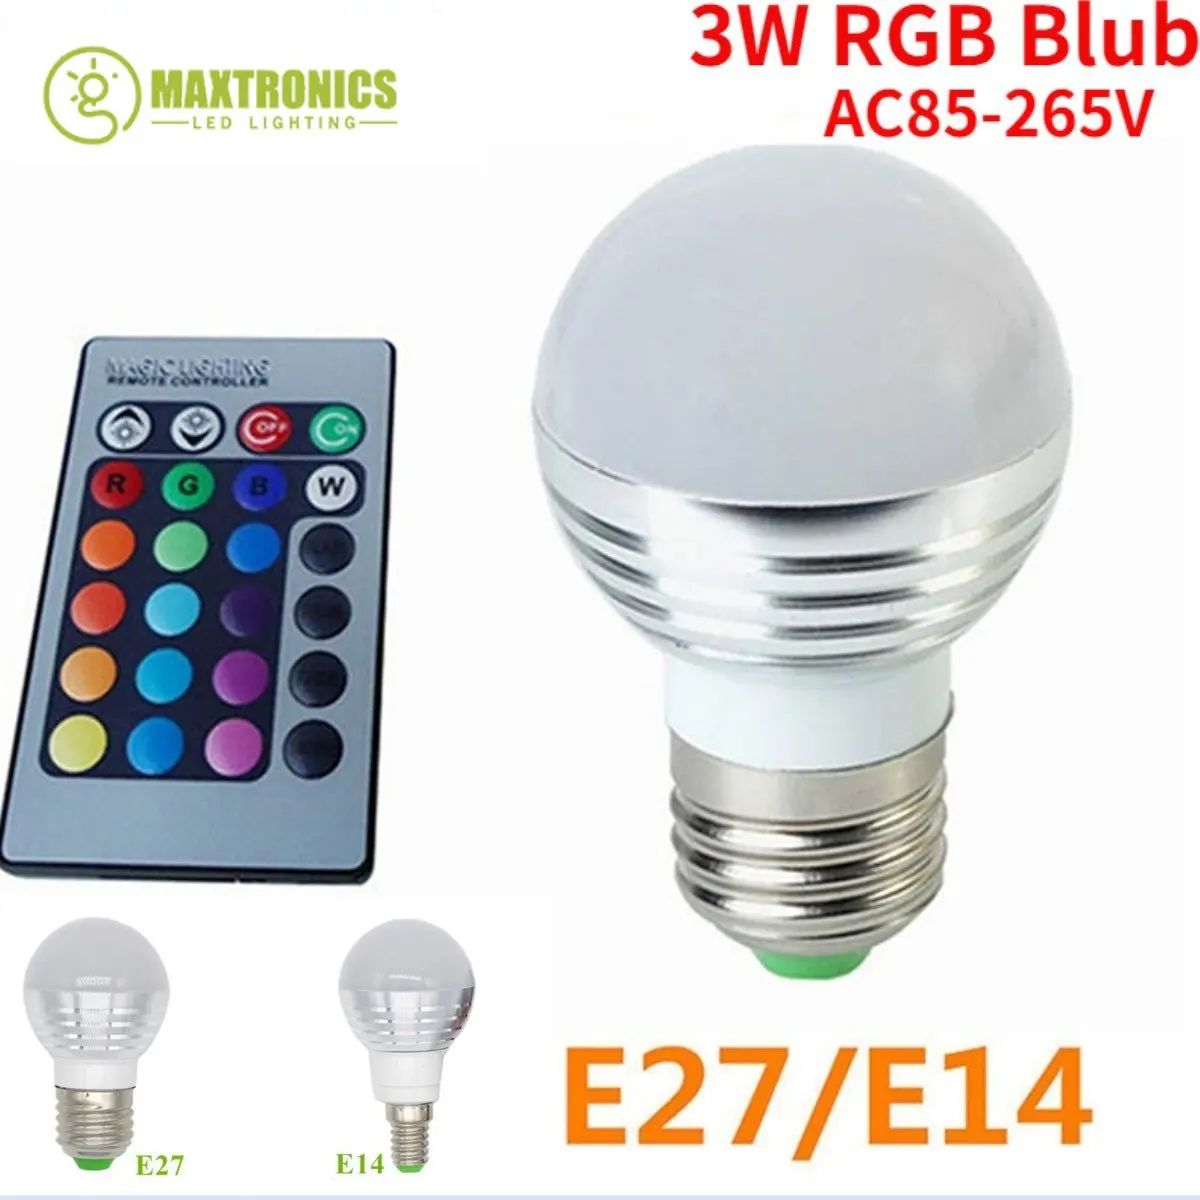 

3W AC85-265V LED Bulb Lamp E27 E14 RGB Colorful Lamp Ampoule Led Light Remote infrared Dimmable Globe Spherical Bulbs Home Decor